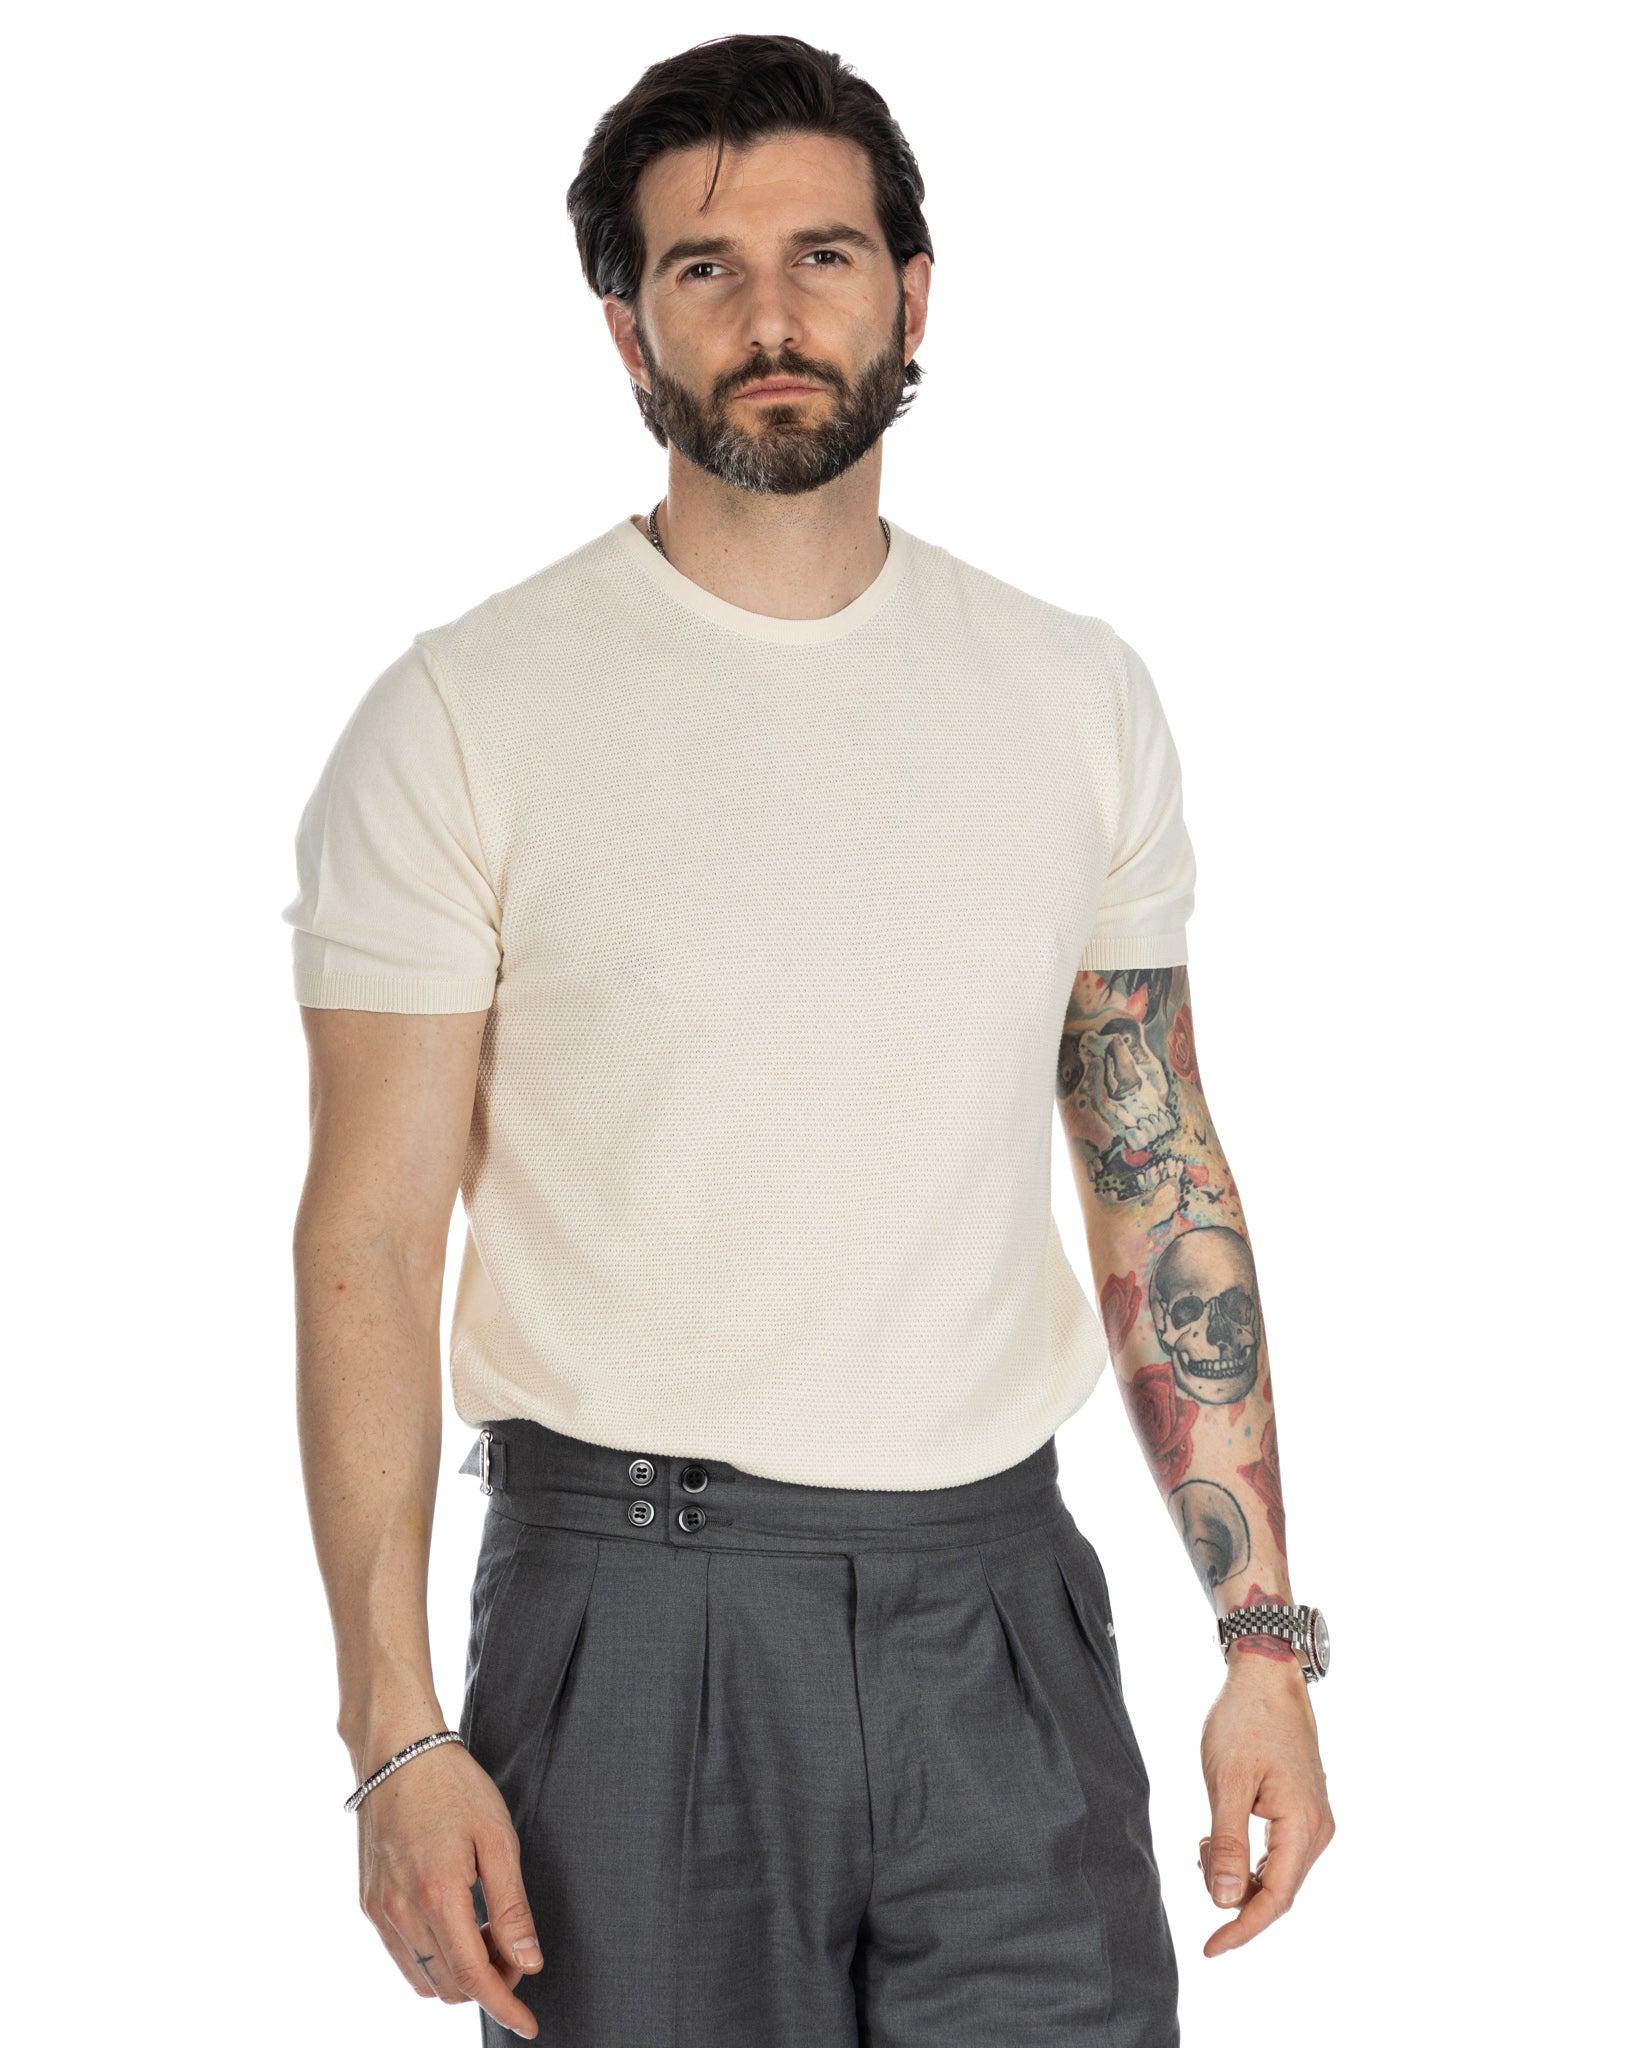 Lorenzo - t-shirt panna in maglia jacquard